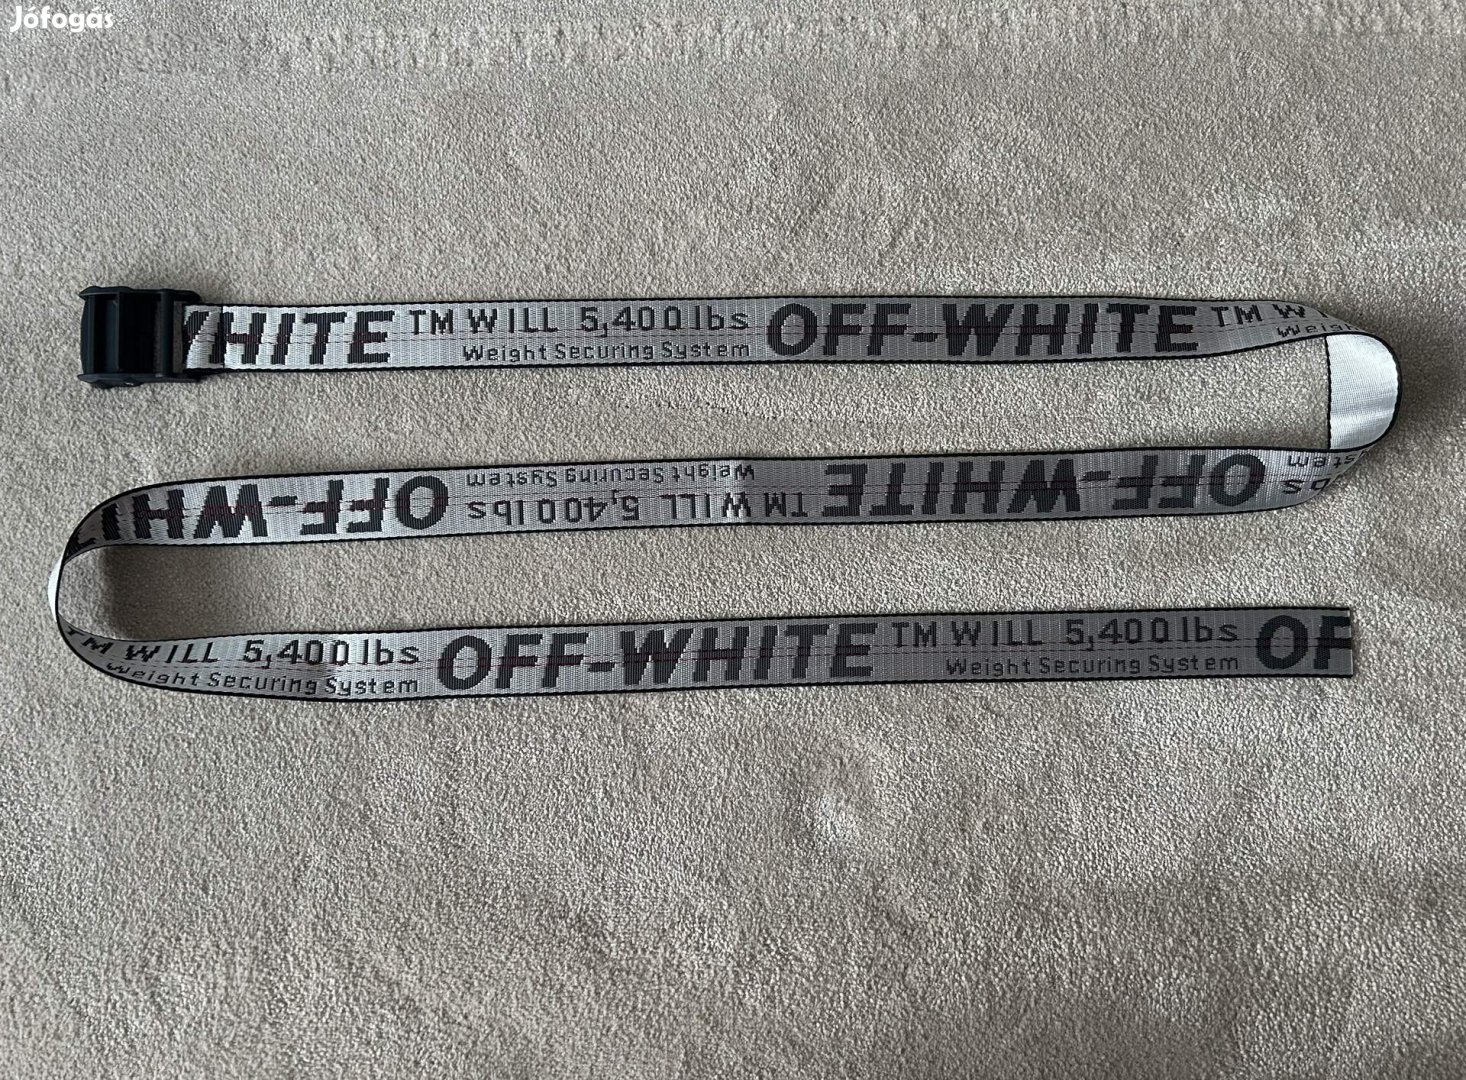 Off-white belt/öv